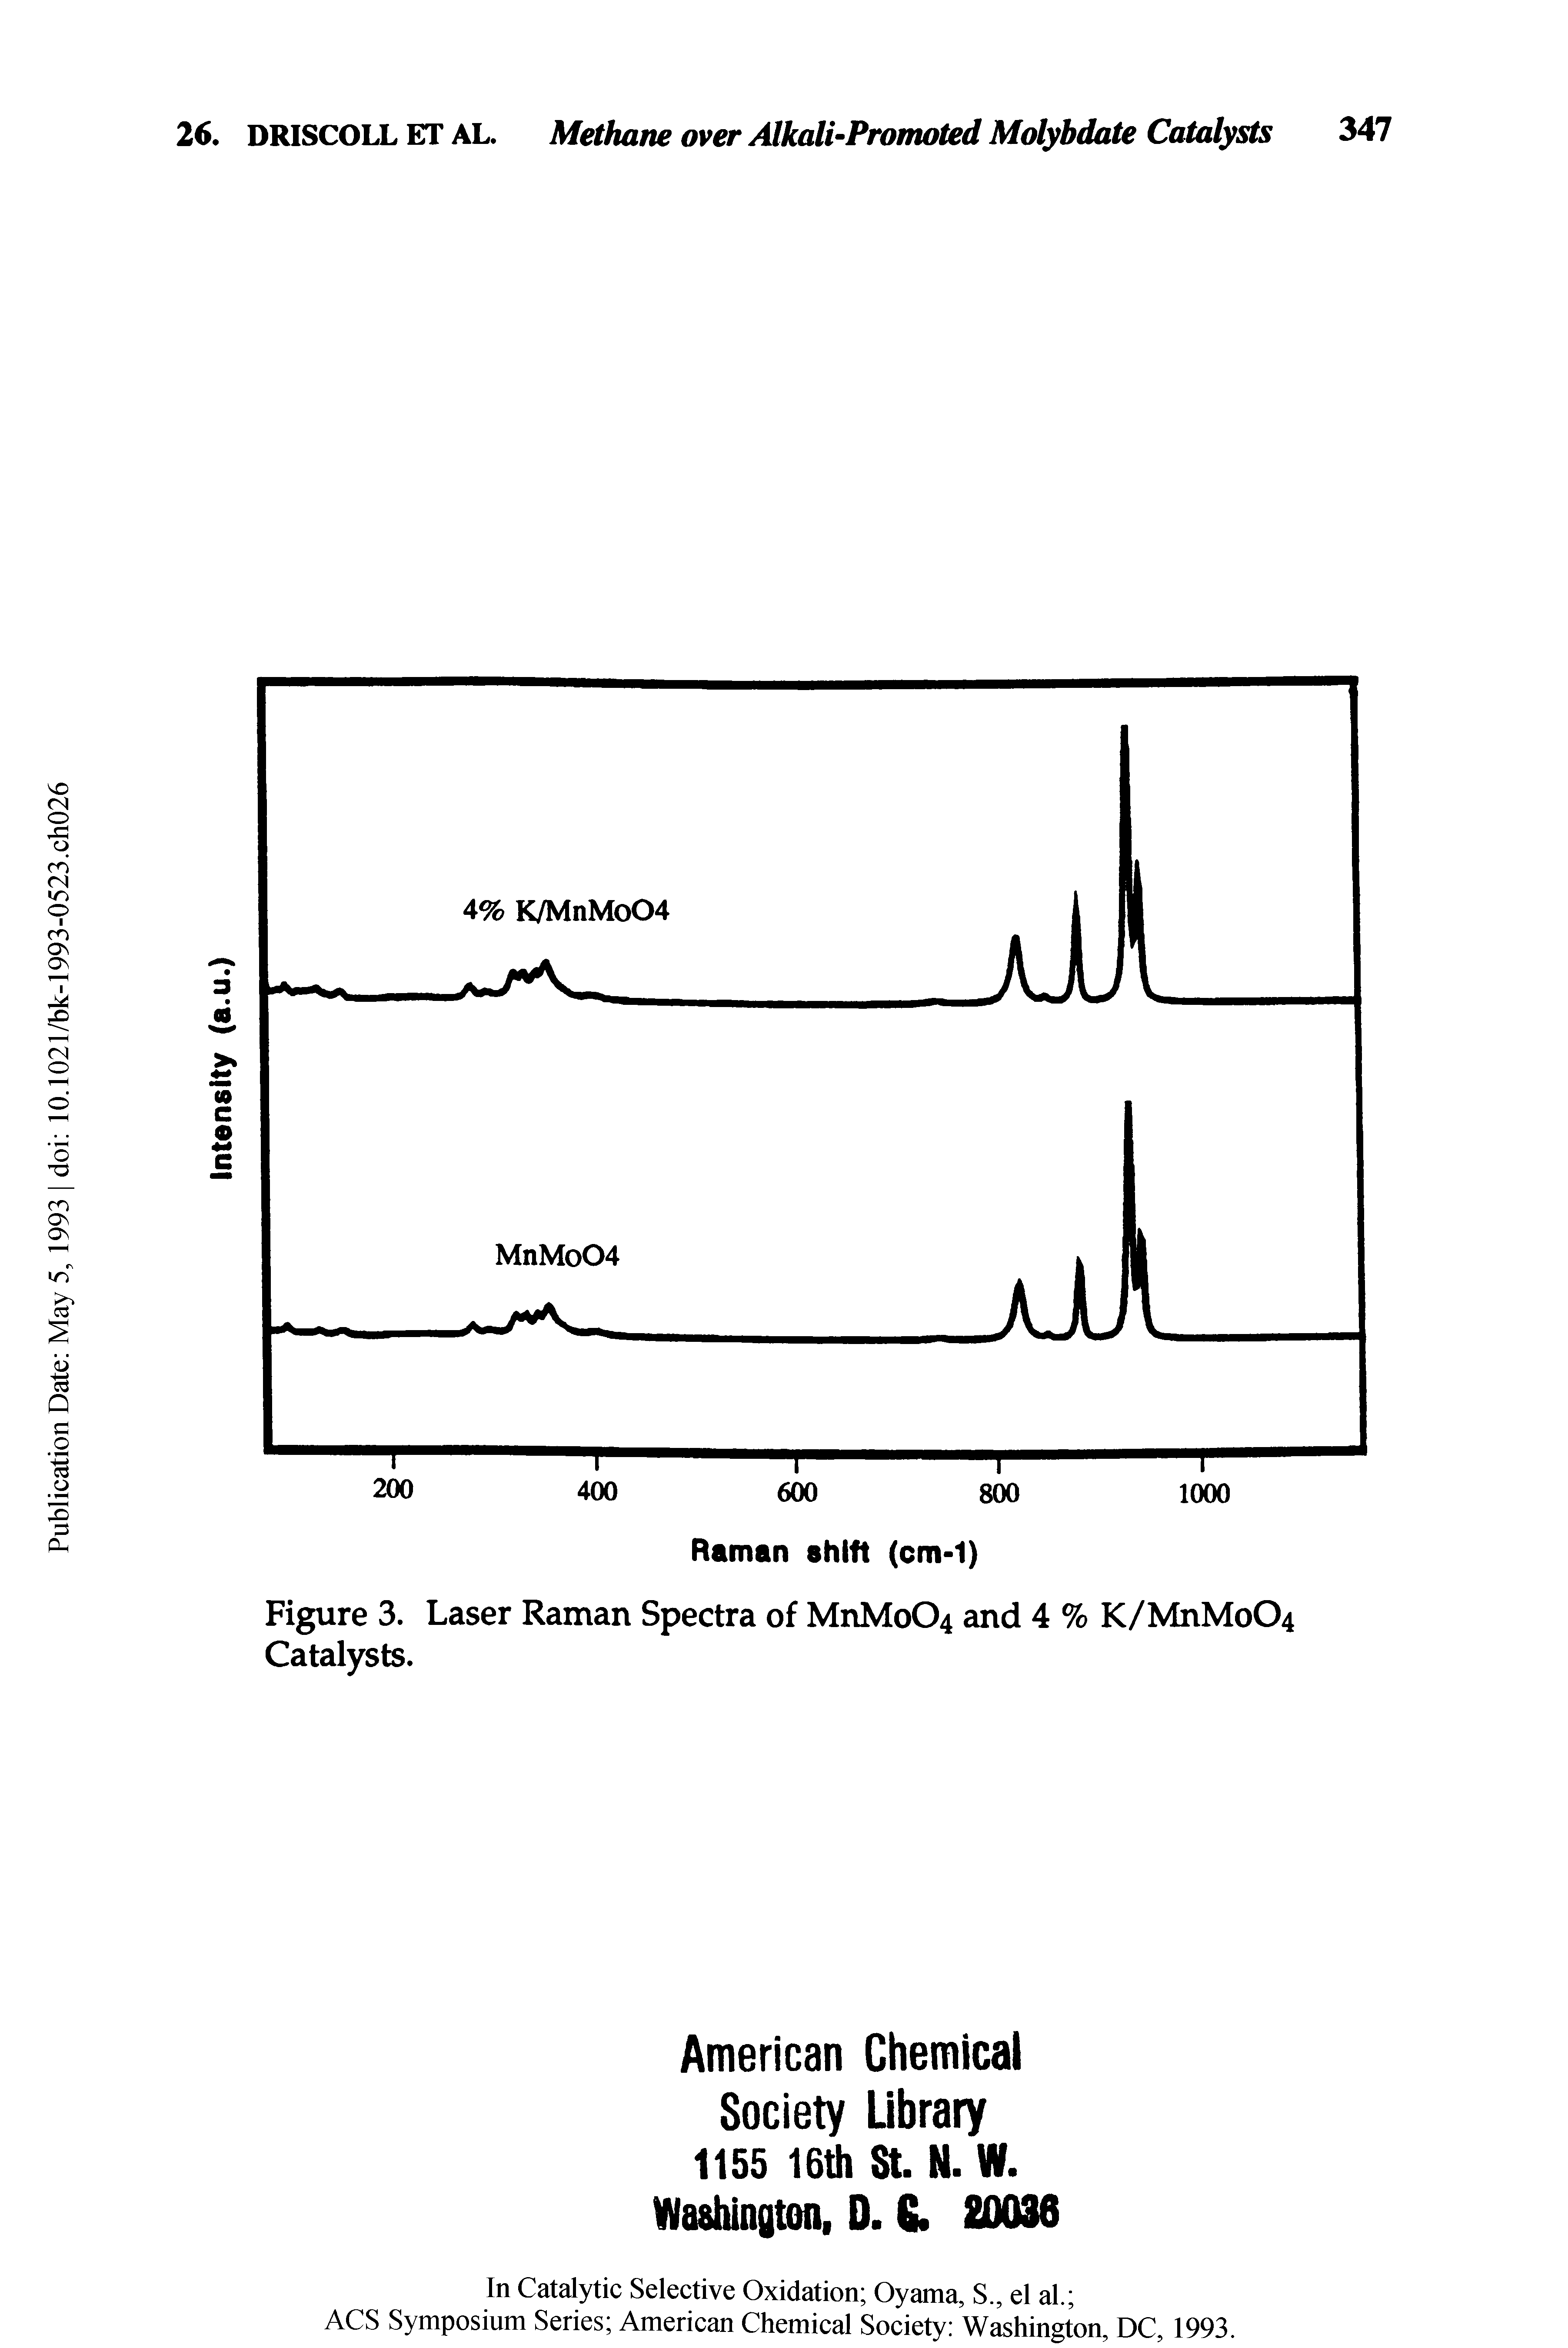 Figure 3. Laser Raman Spectra of MnMo04 and 4 % K/MnMo04 Catalysts.